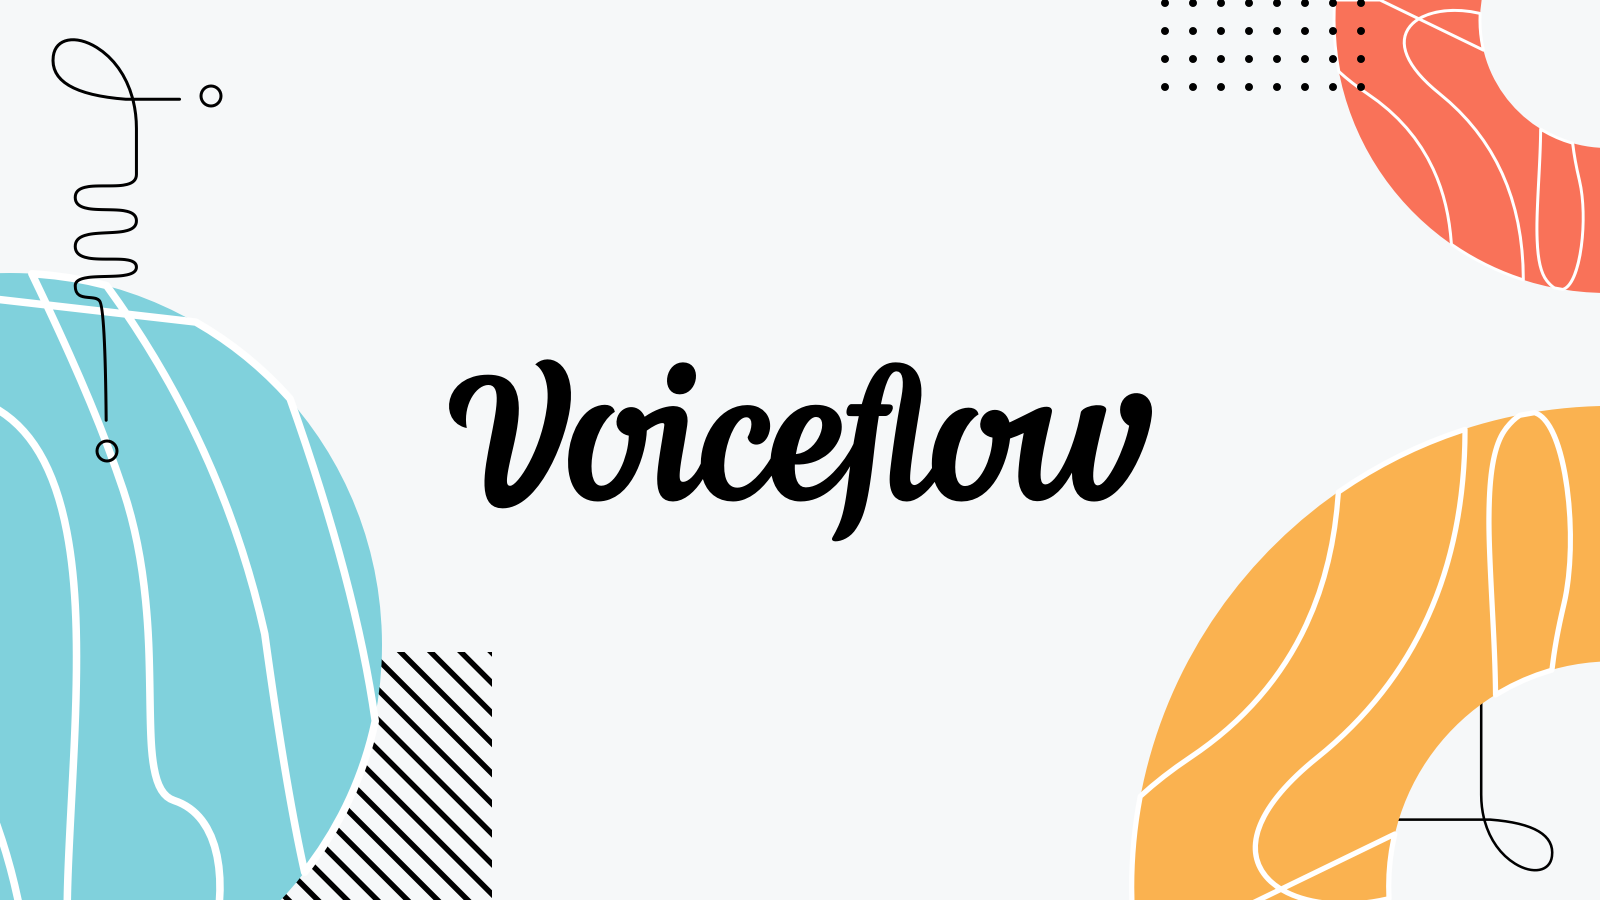 Voiceflow. No-Code Tools for websites.